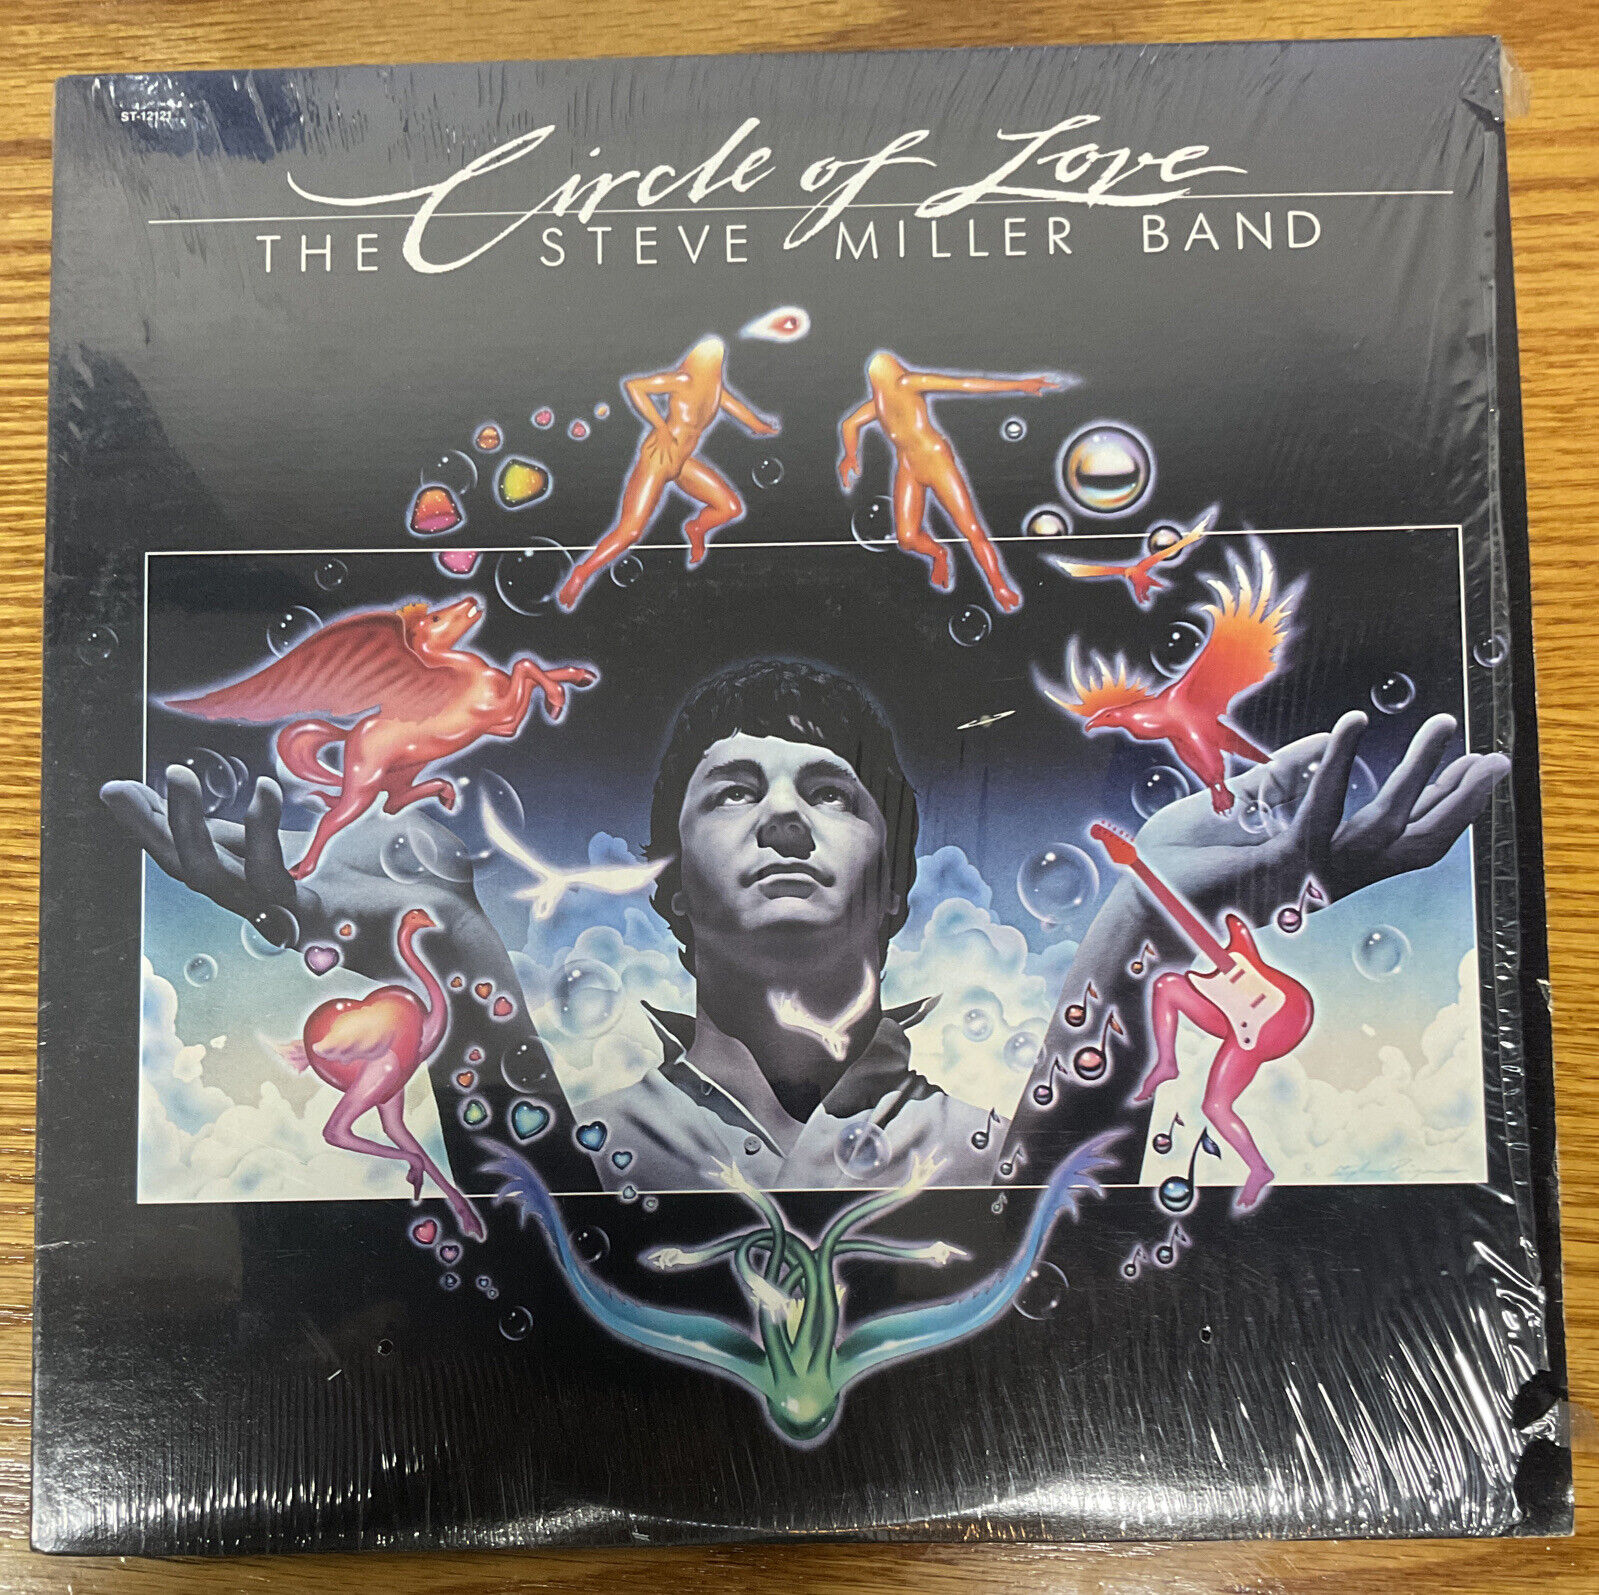 1987 Steve Miller Band Circle Of Love LP Album In Shrink